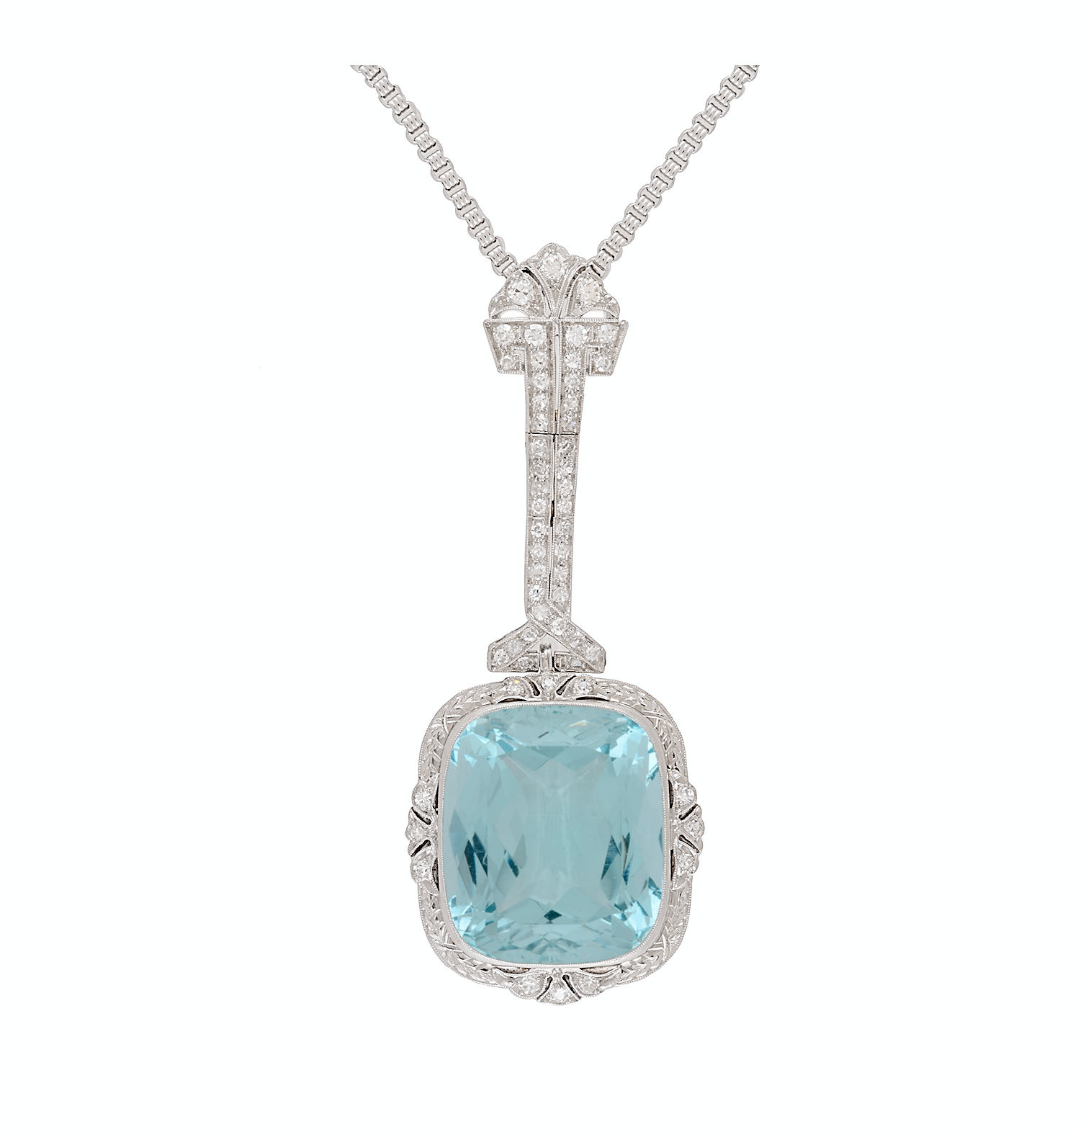 Vintage Art Deco Era GIA Certified Aquamarine and Old Euro Cut Diamond Necklace-Semi Precious Jewelry-ASSAY